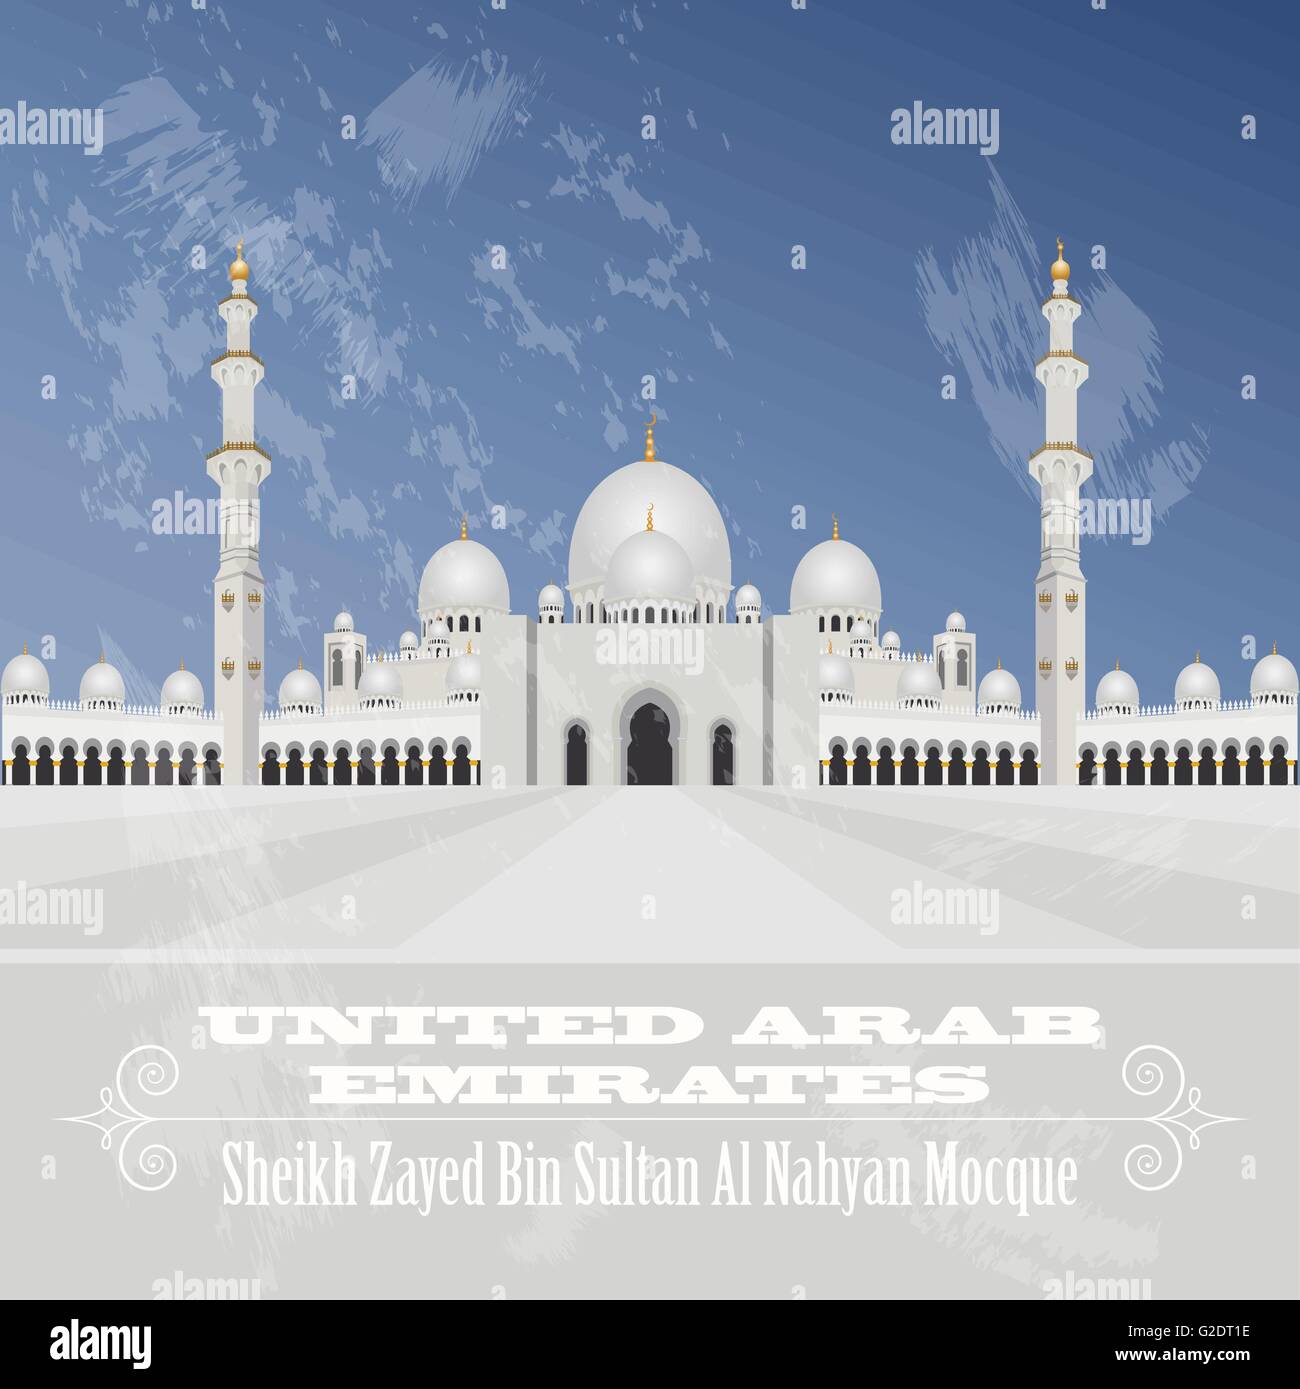 United Arab Emirates landmarks. Retro styled image. Vector illustration Stock Vector